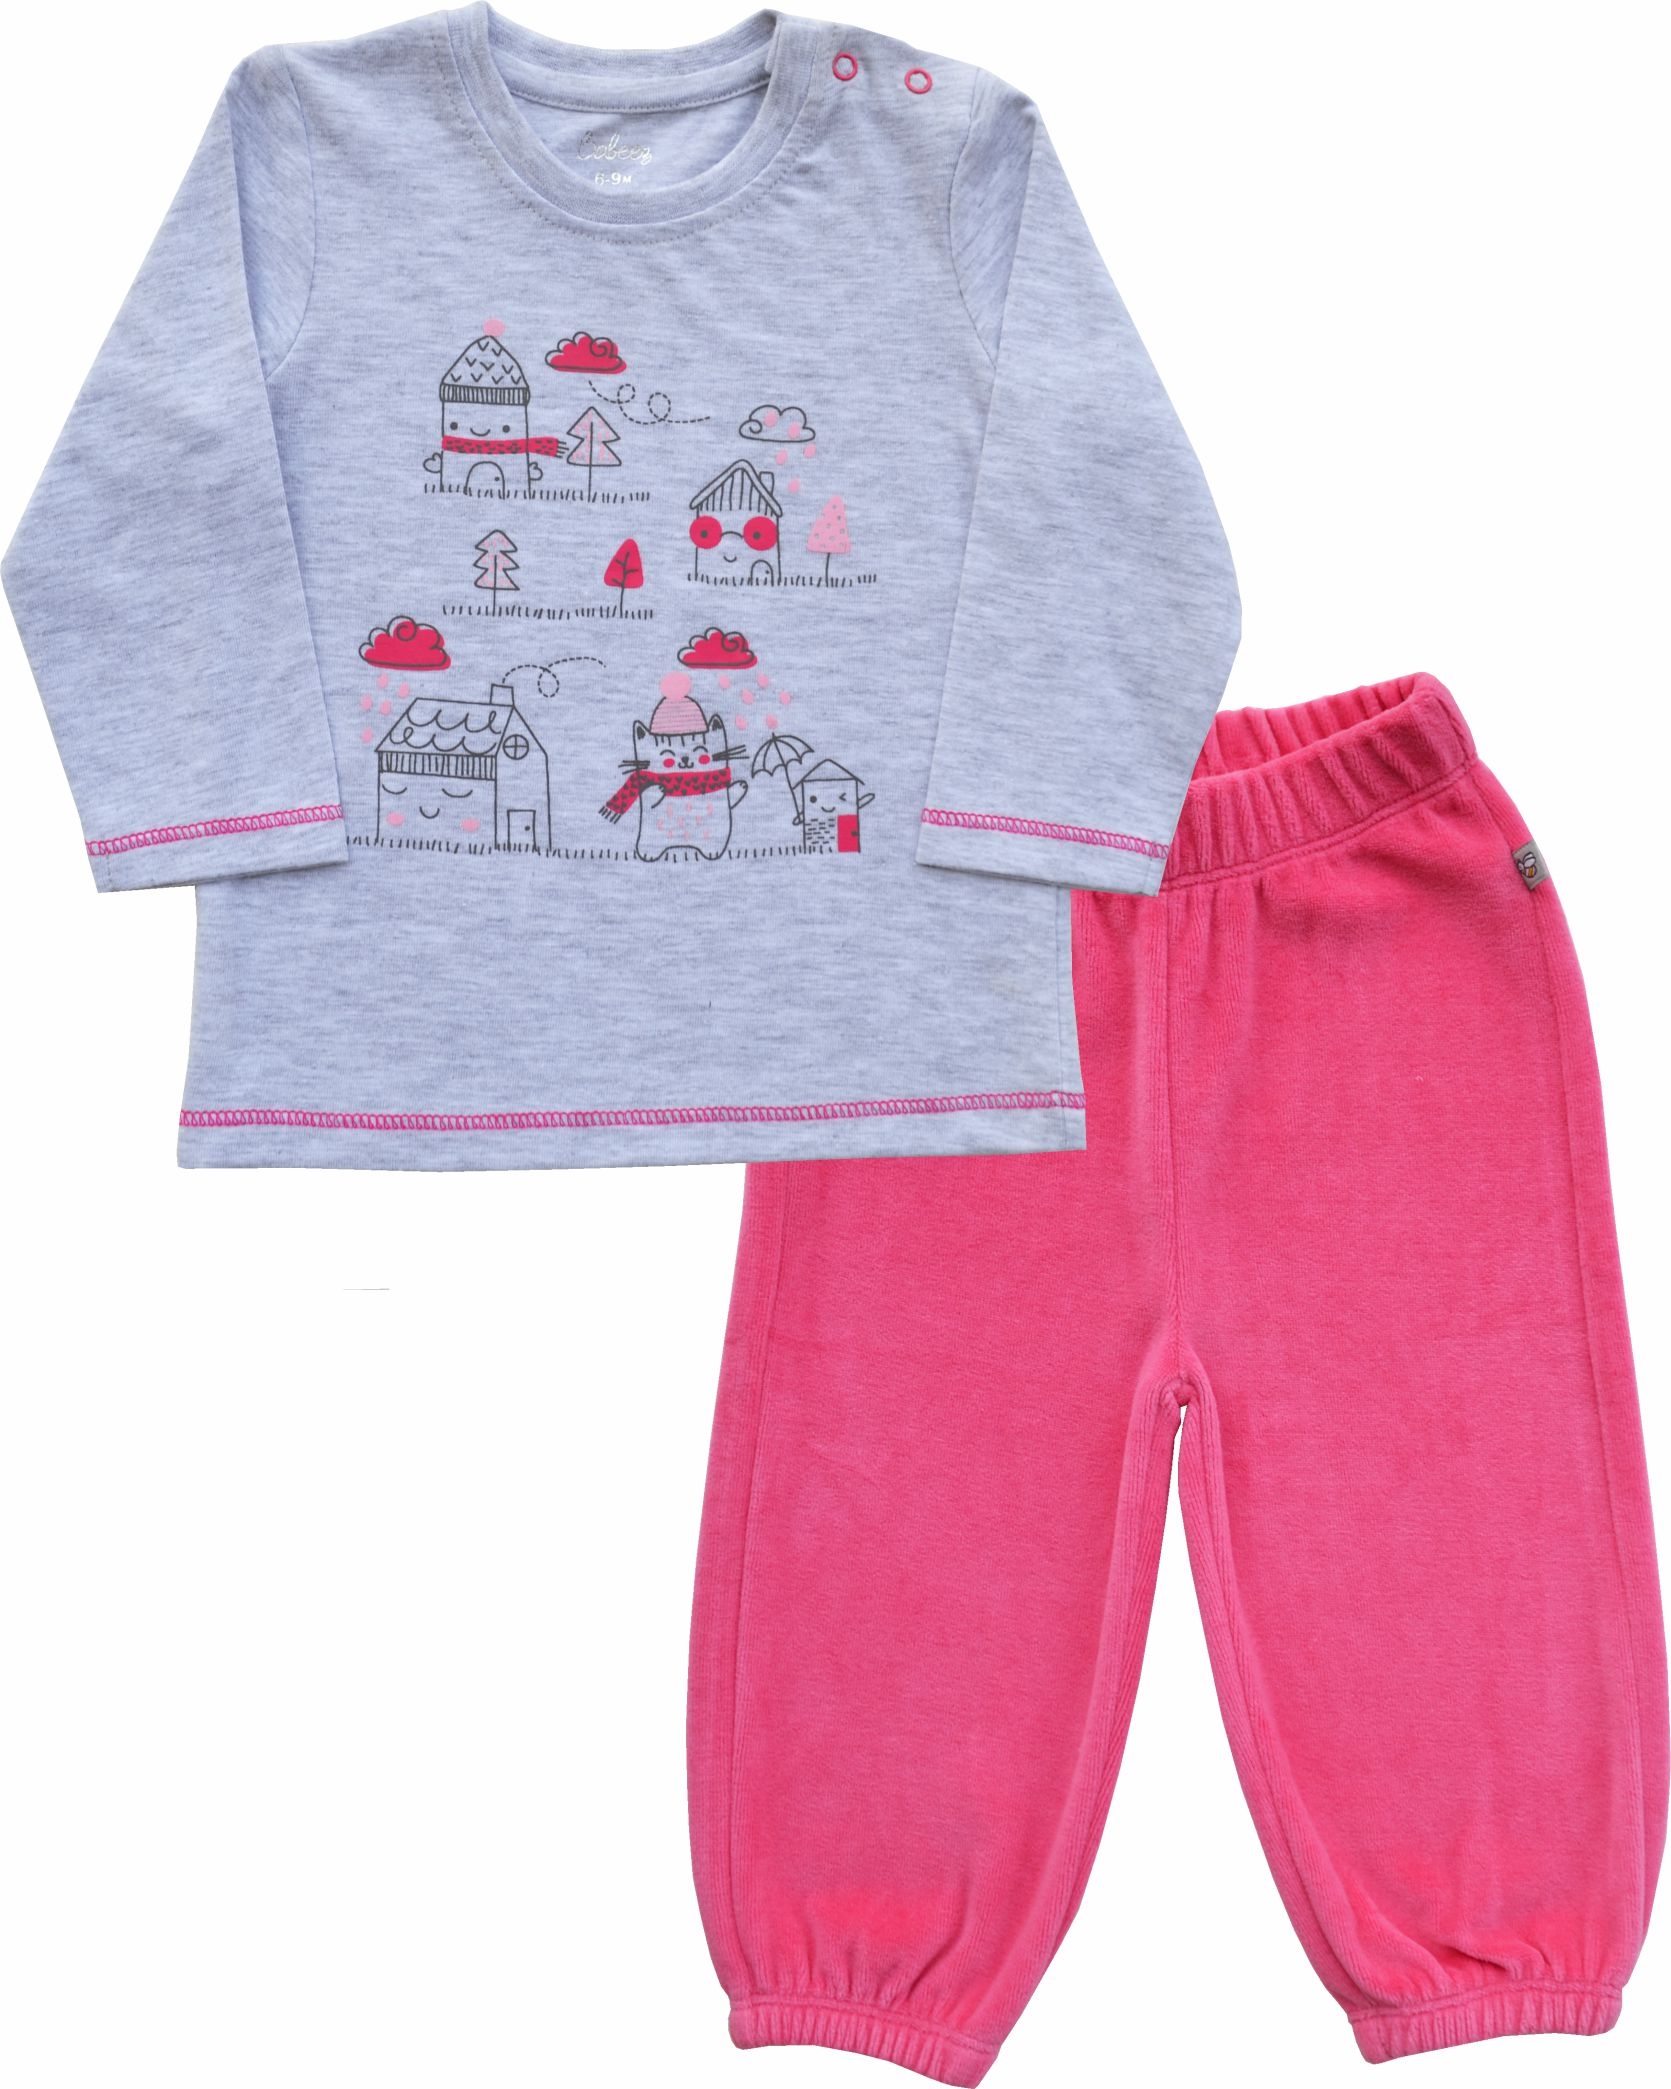 Grey with Pink printed Full sleeve Top+PinkVelour Pant Set(100% Cotton Interlock))